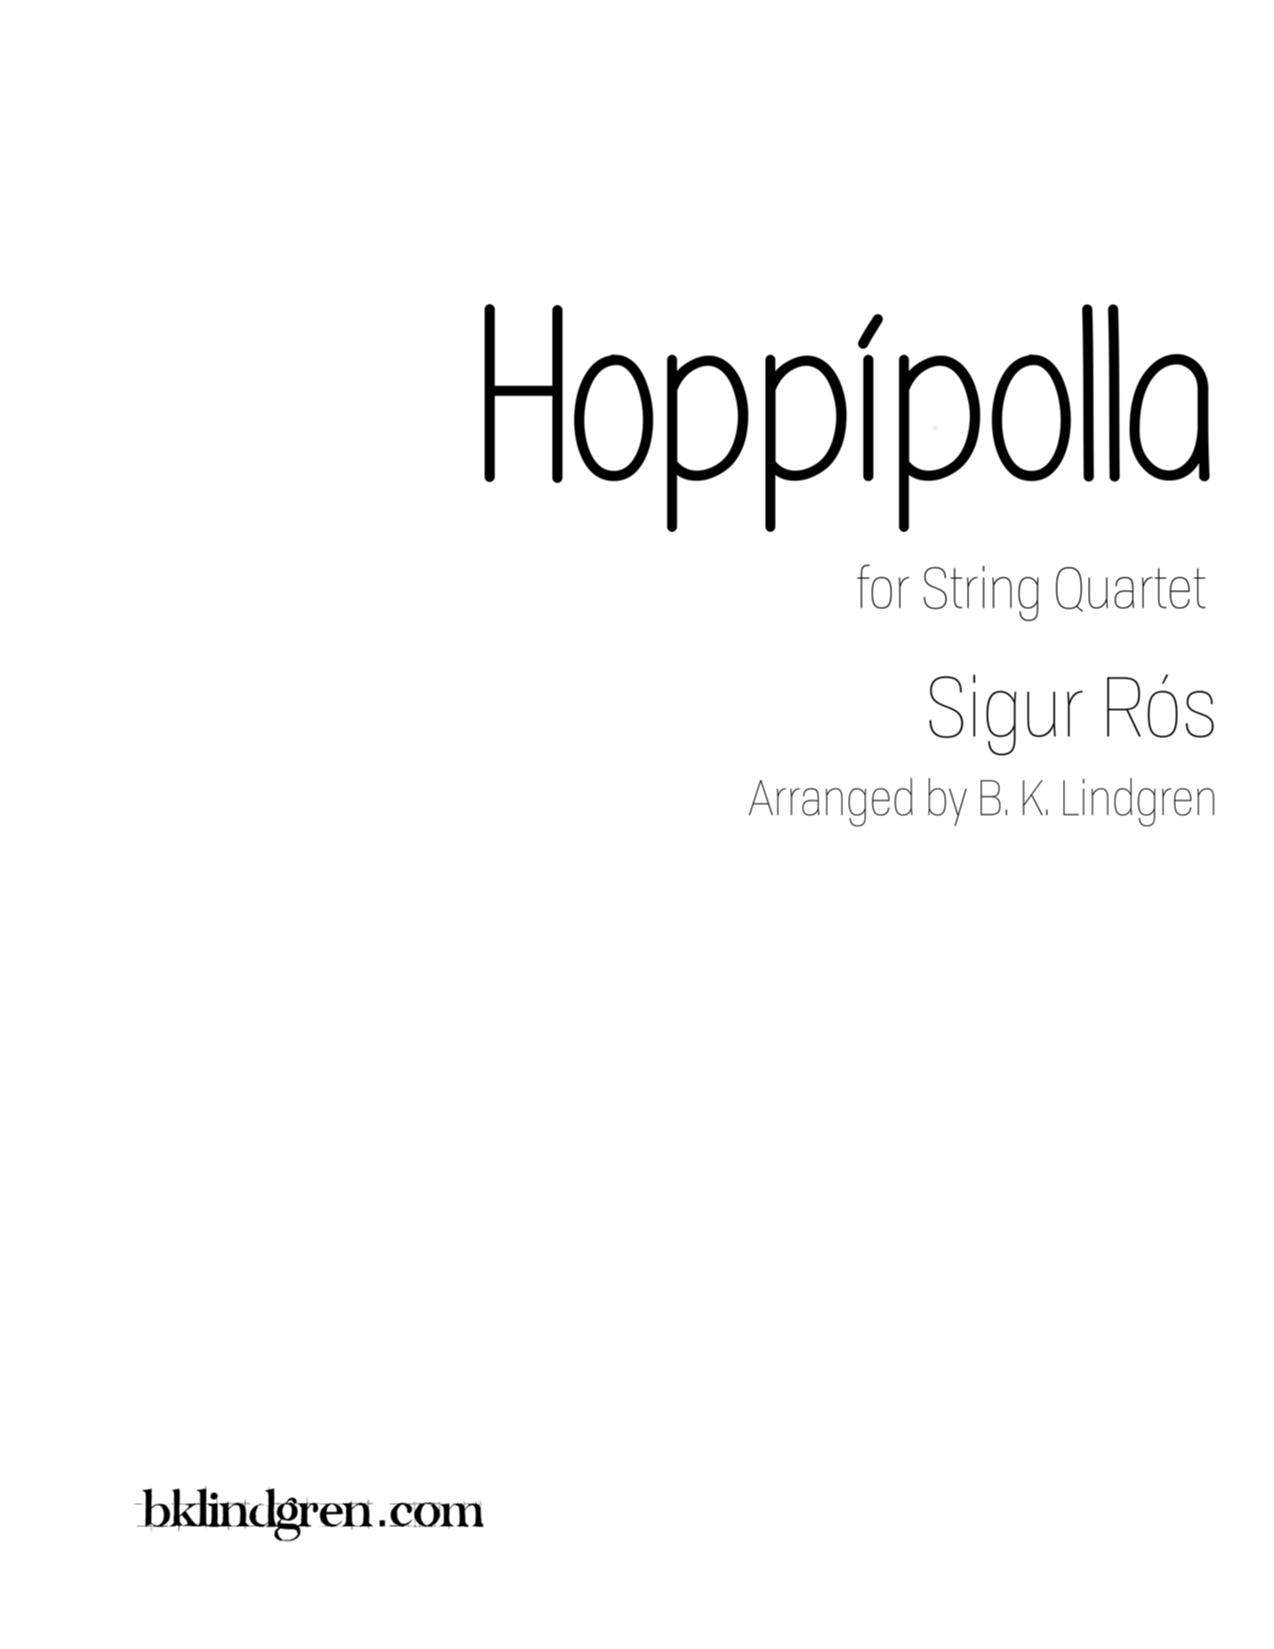 Hoppipolla by Sigur Ros - for String Quartet